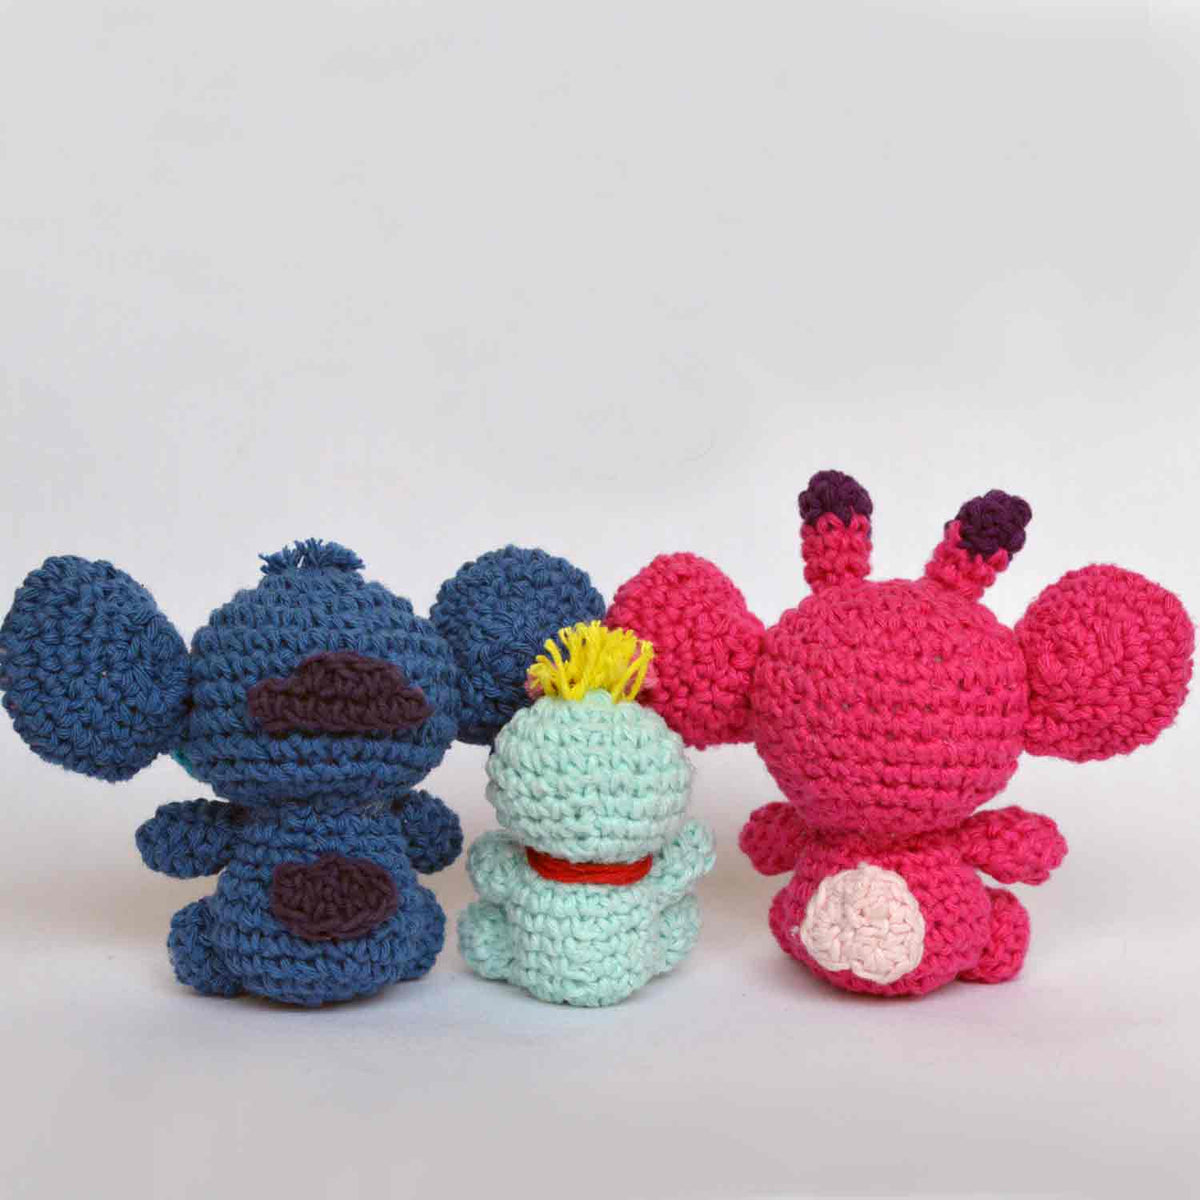 Lenns Craft Mini Stitch Scrump Angel Amigurumi Handmade Crochet Plushies Add Keychain per Piece